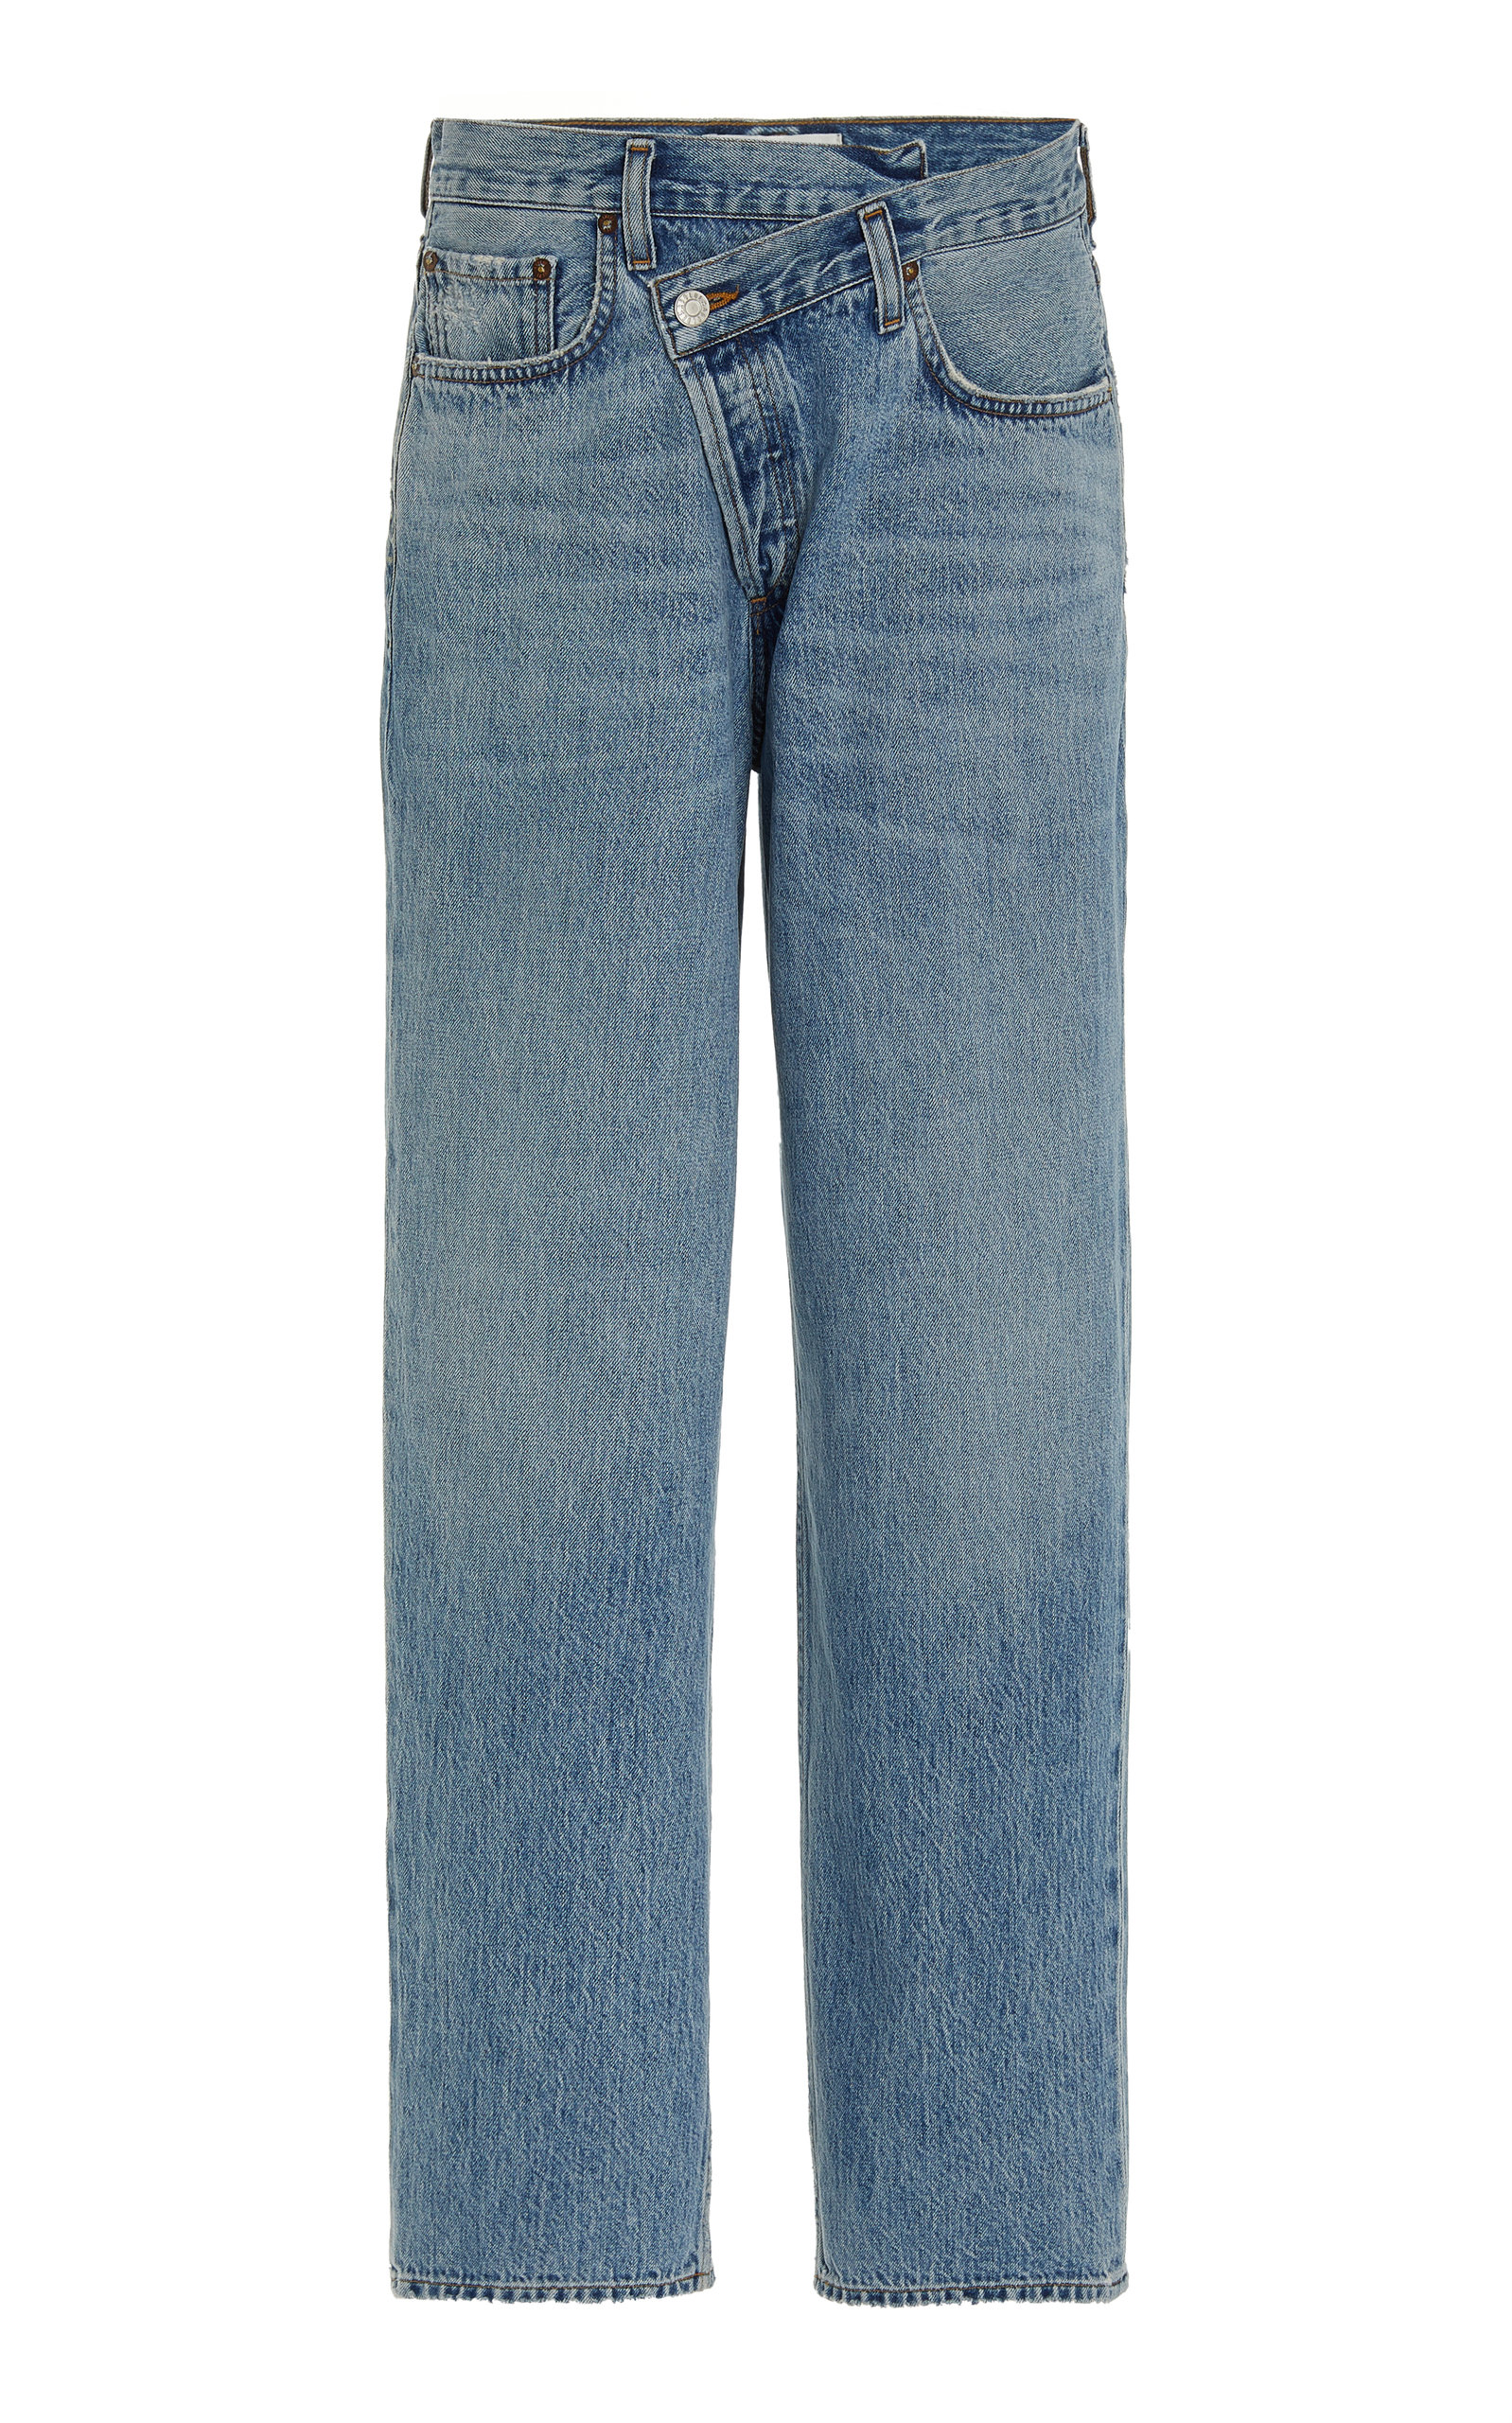 Agolde - Women's Criss-Cross Oversized Rigid High-Rise Wide-Leg Jeans - Medium Wash - Moda Operandi